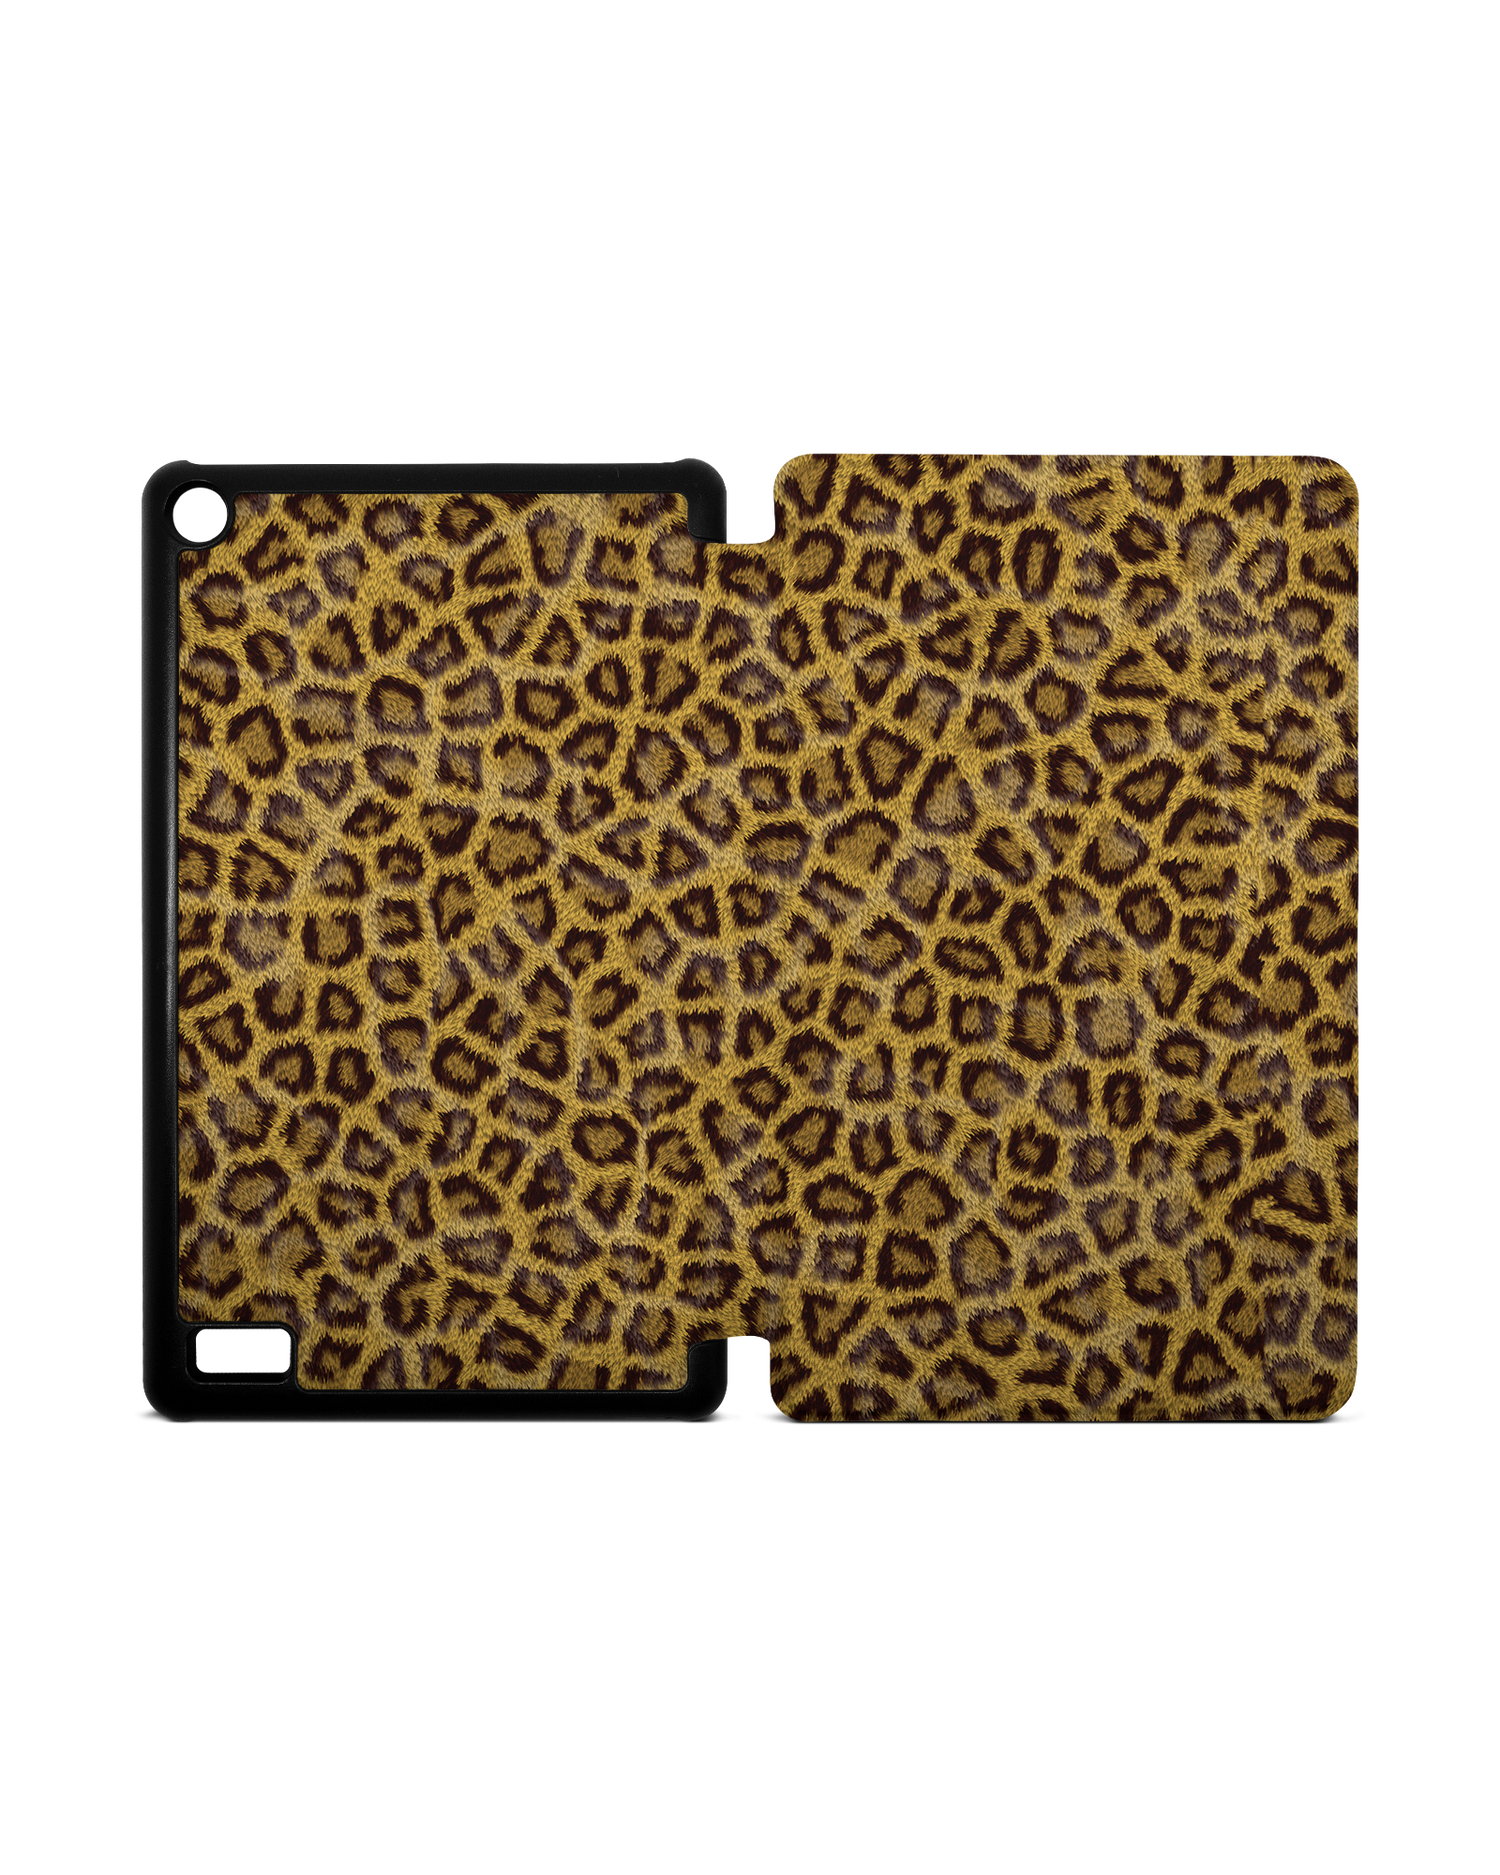 Leopard Skin Tablet Smart Case for Amazon Fire 7: Opened